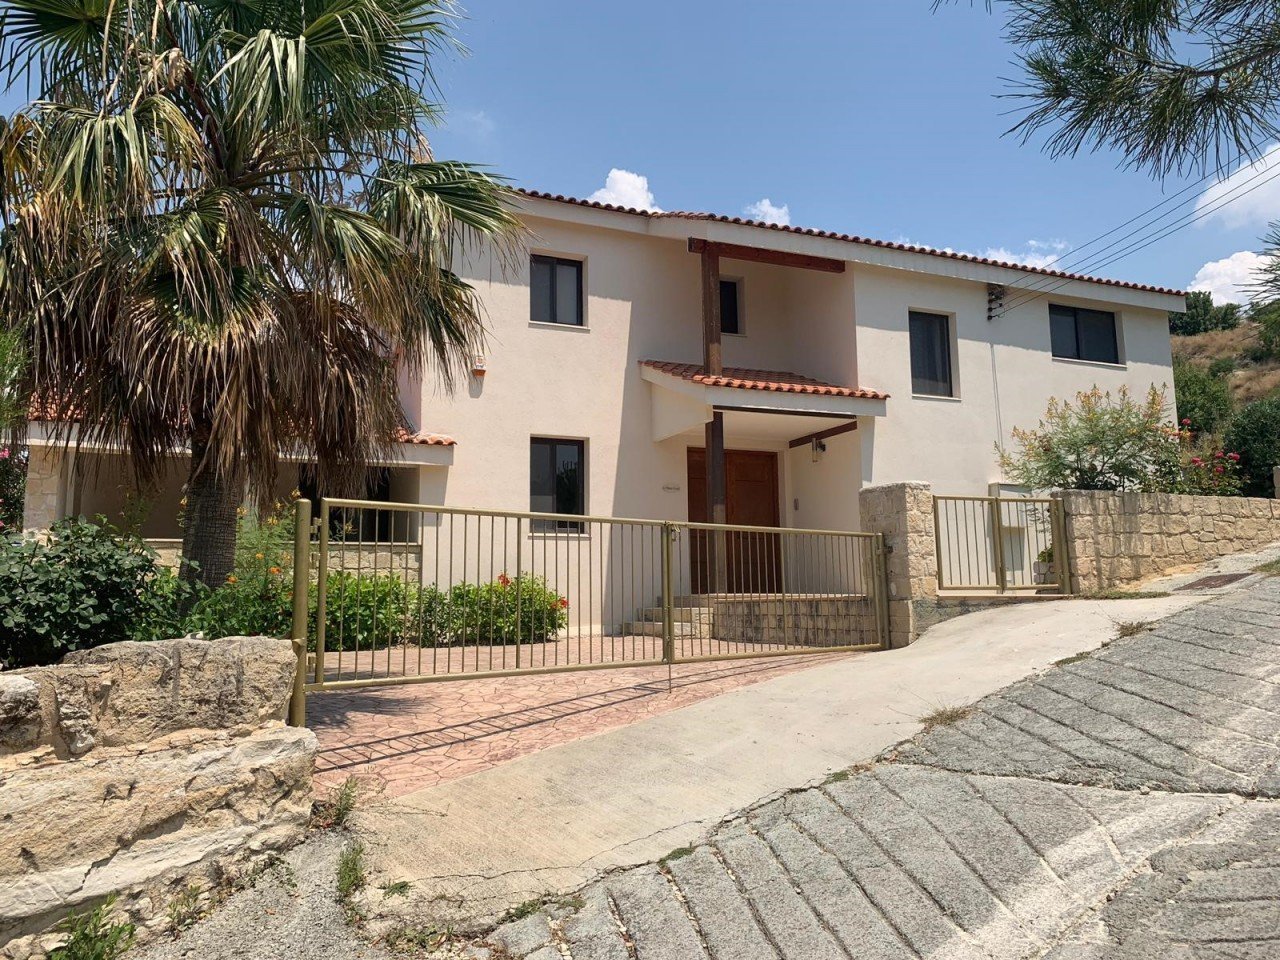 For Sale: House (Detached) in Monagri, Limassol  | Key Realtor Cyprus